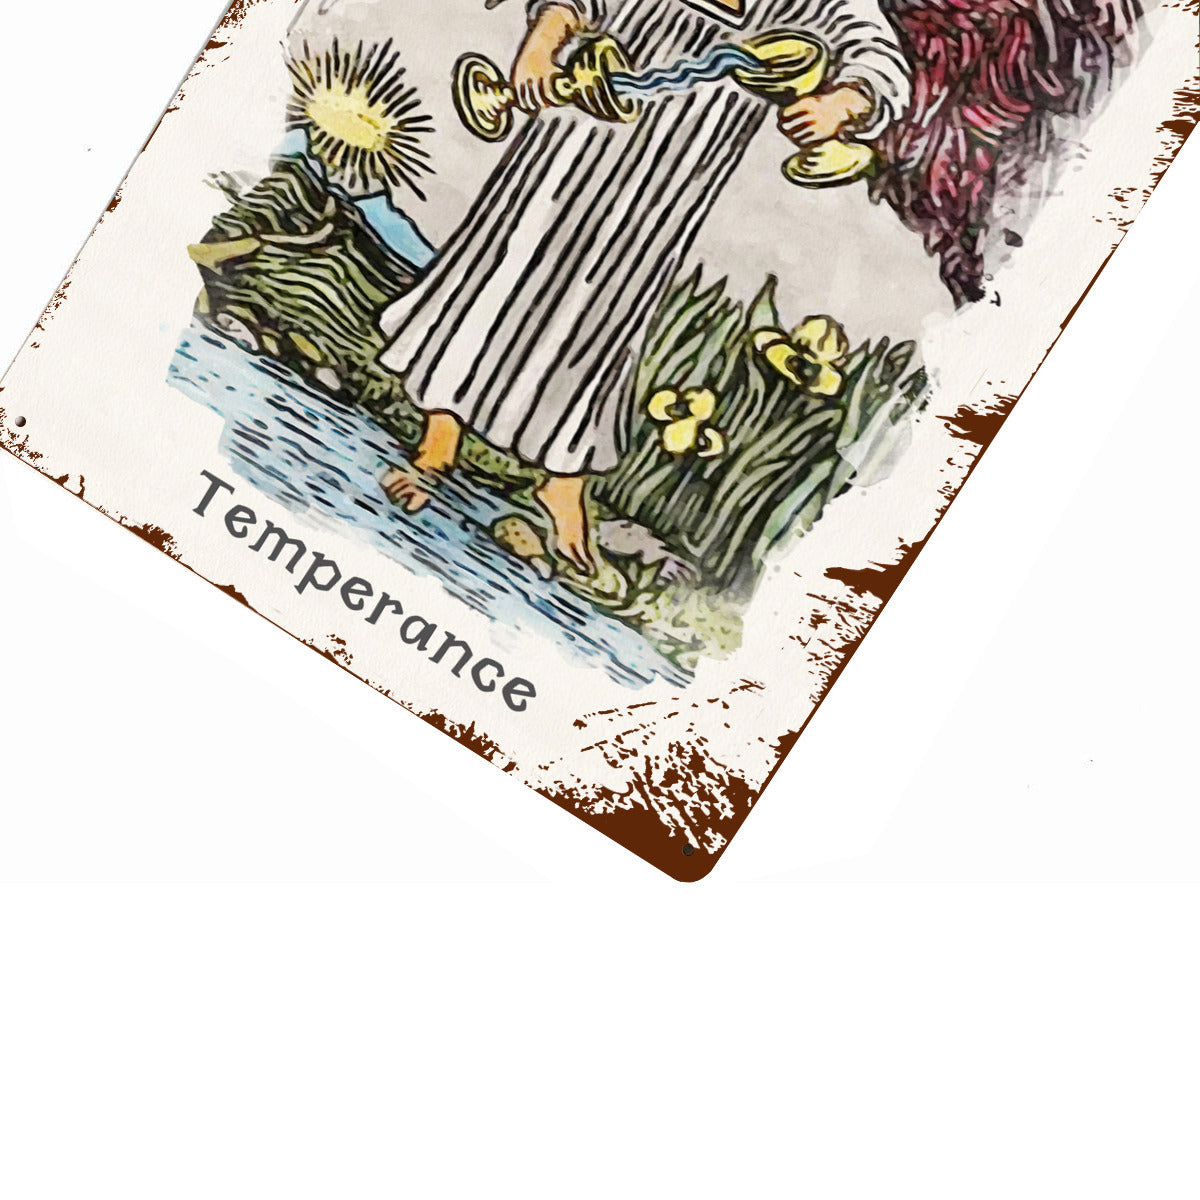 Tin Sign Of The Temperance Tarot Card Painting • Major Arcana Waite-Style Cards Vintage Metal Print